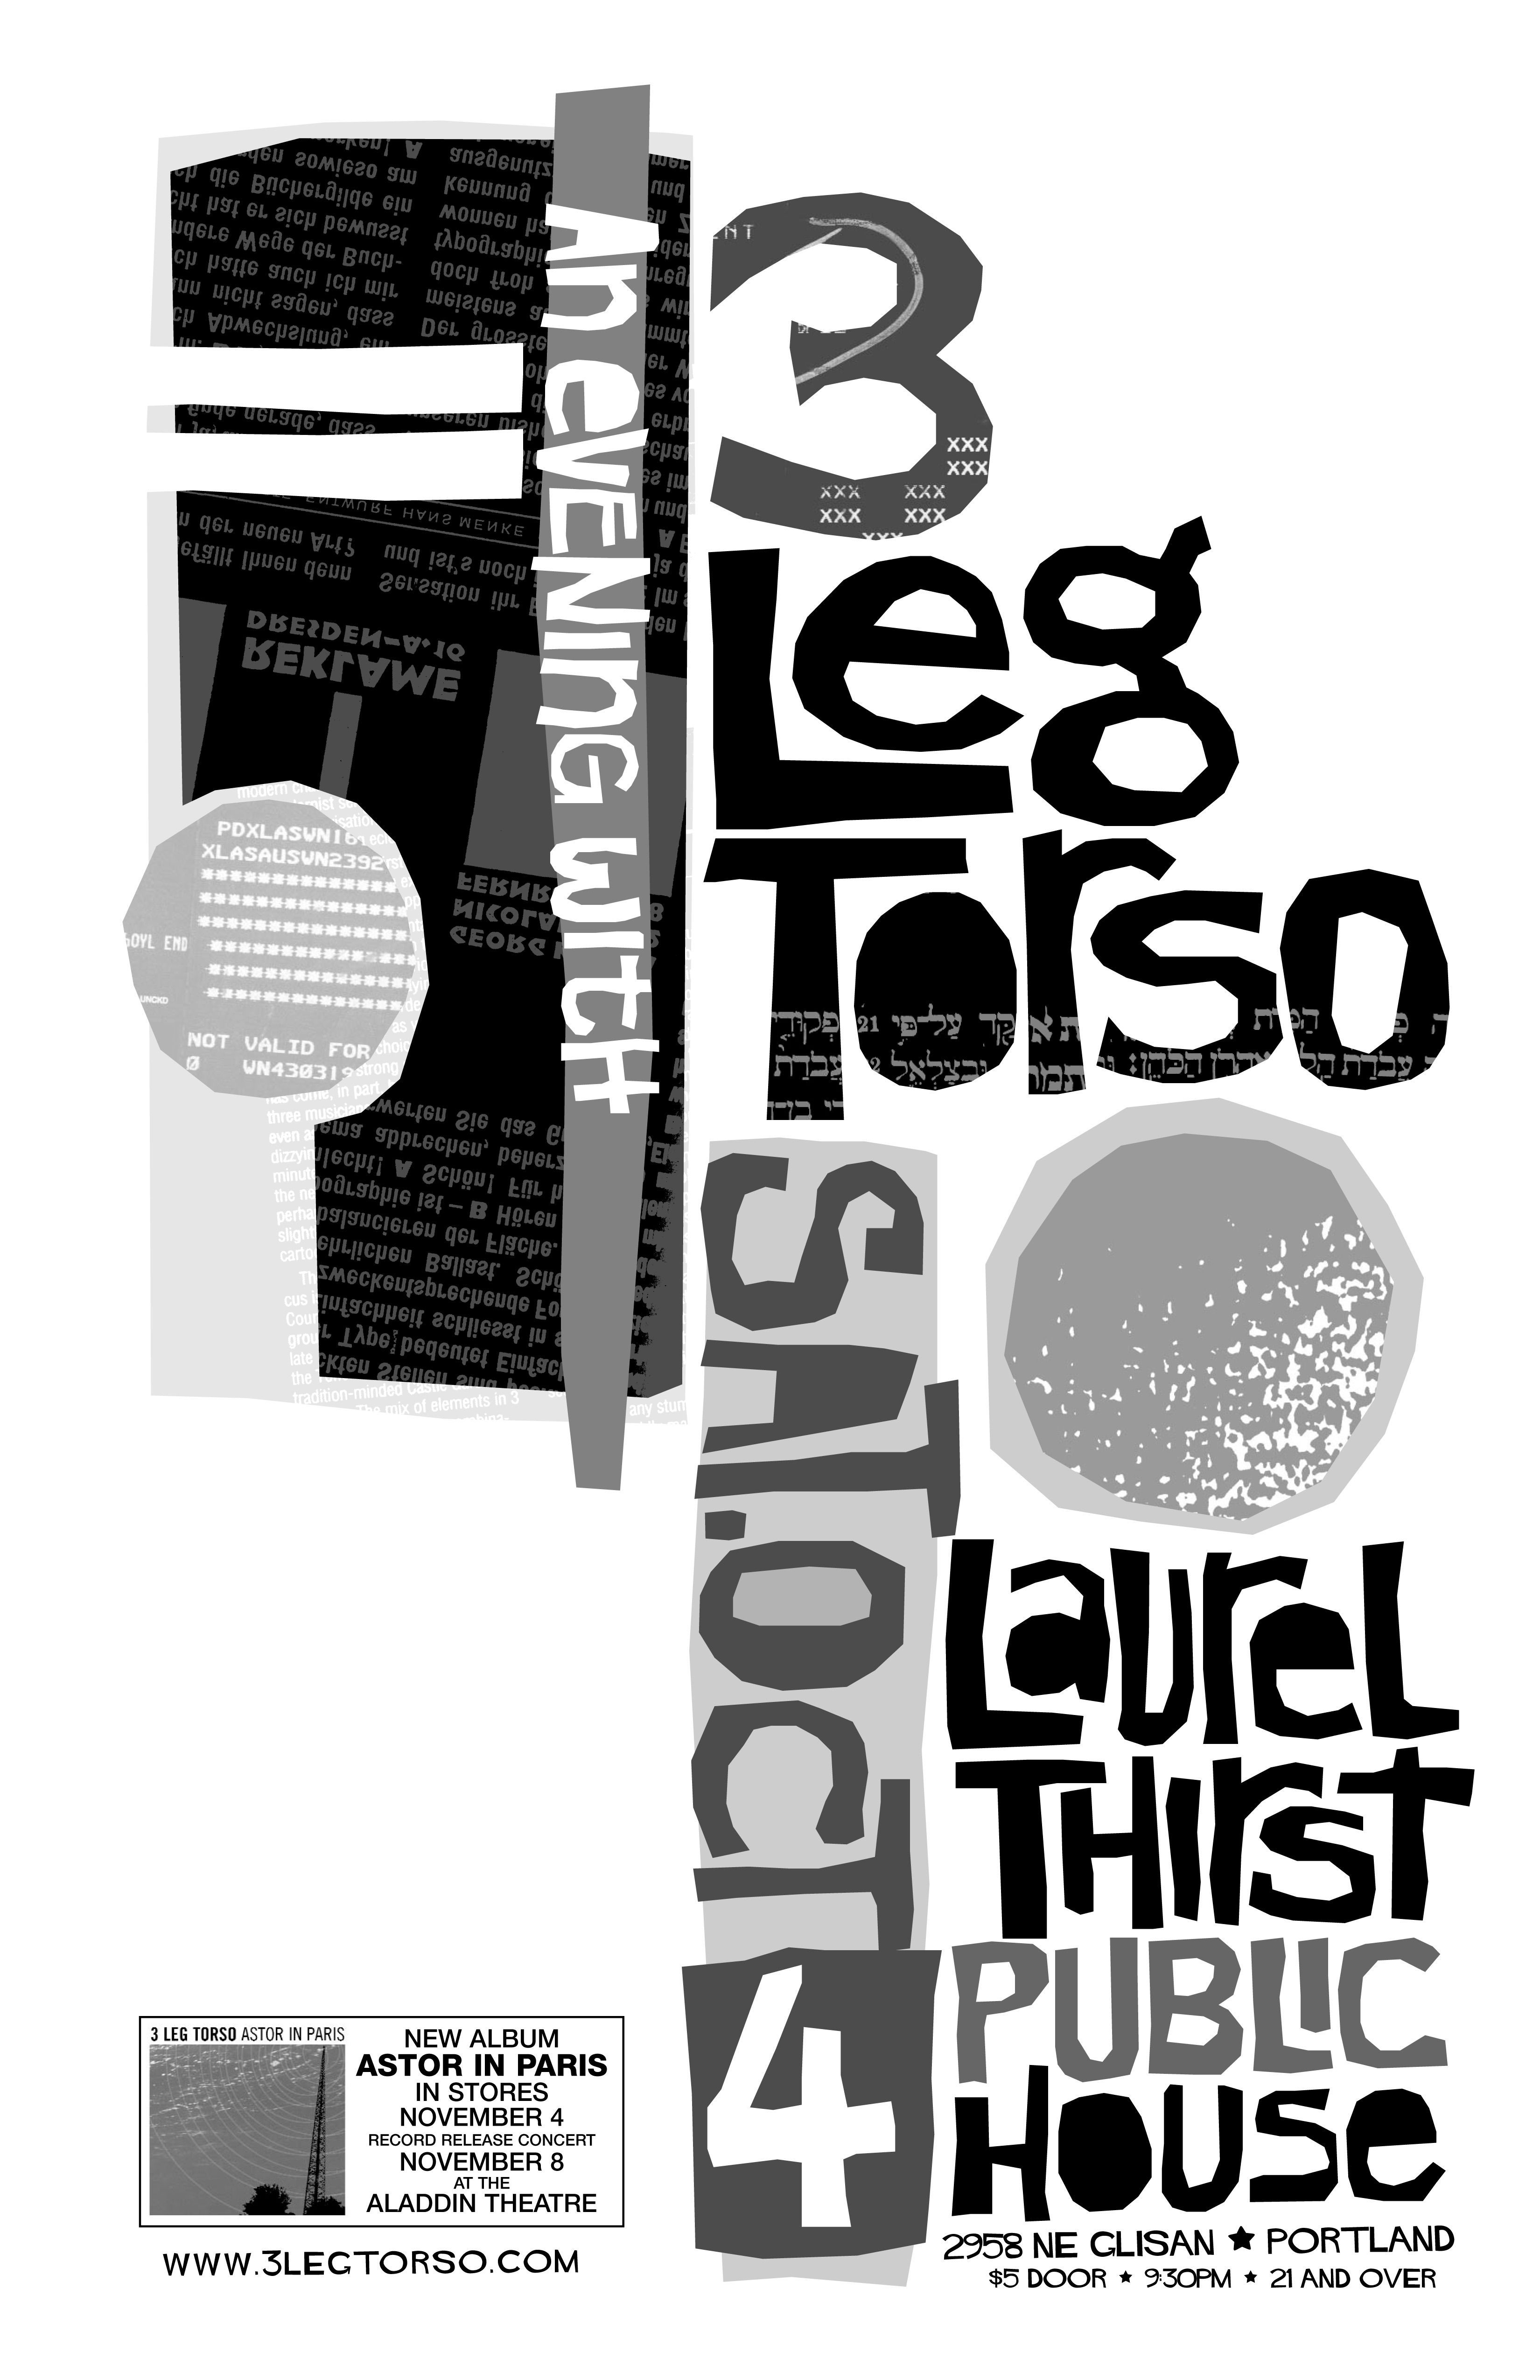 MXP-143.12 3 Leg Torso 2003 Laurelthirst  Oct 4 Concert Poster